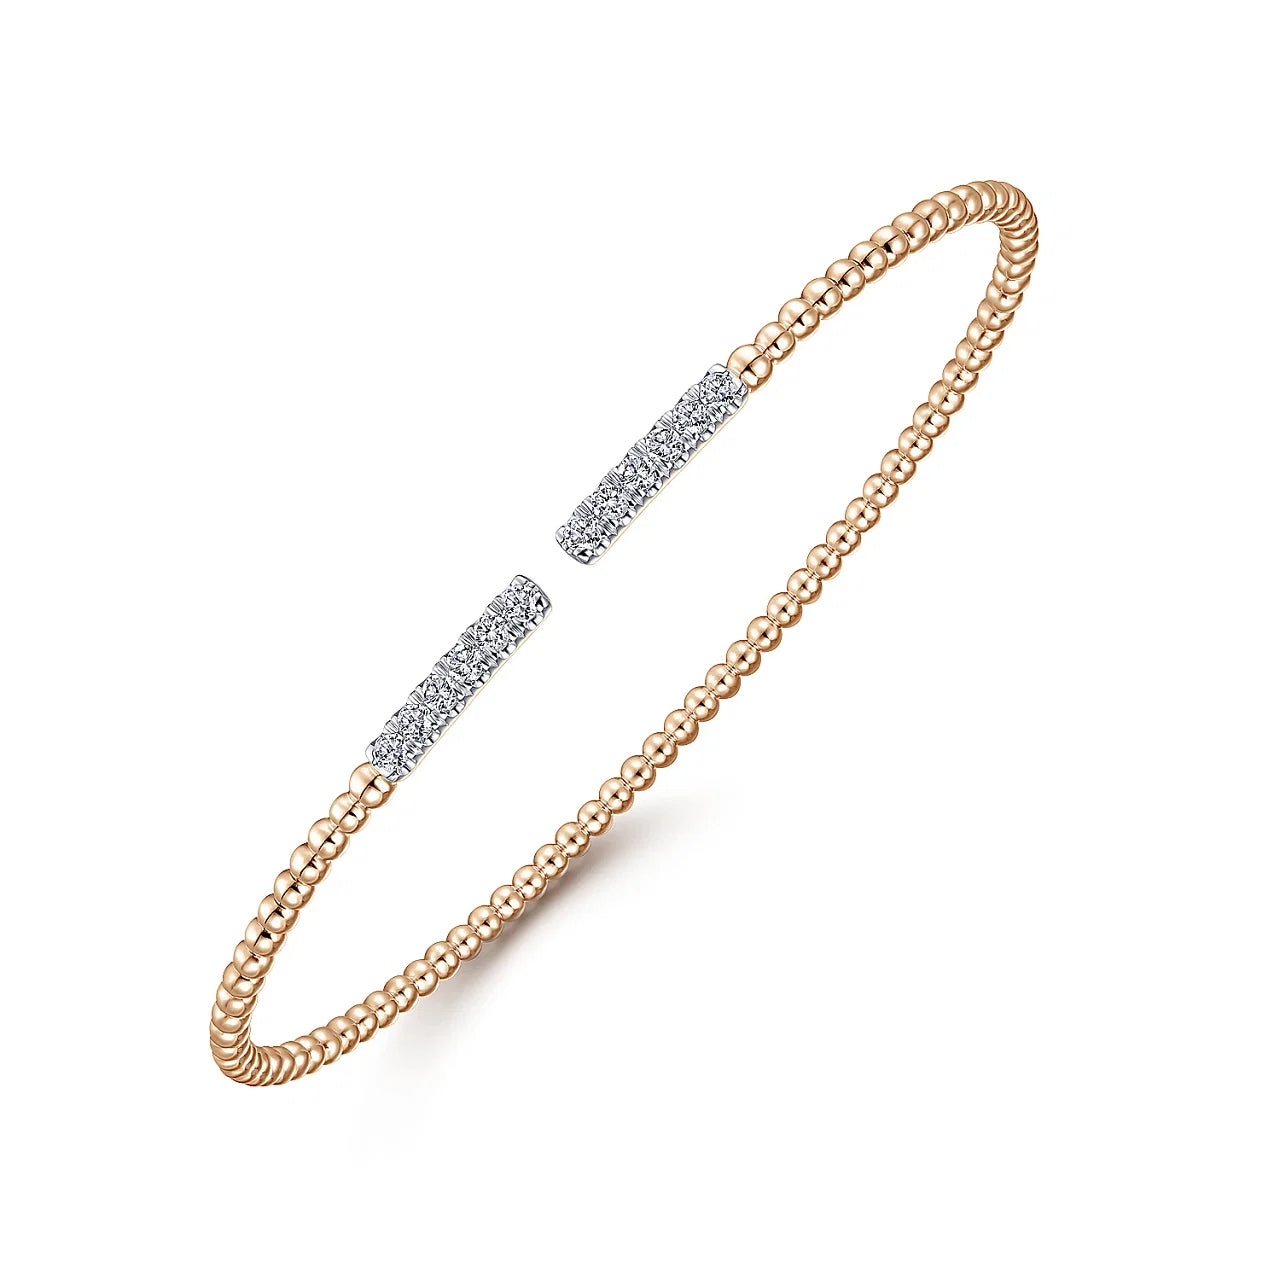 14K Rose Gold Bujukan Bead Cuff Bracelet with Diamond Pave Bars